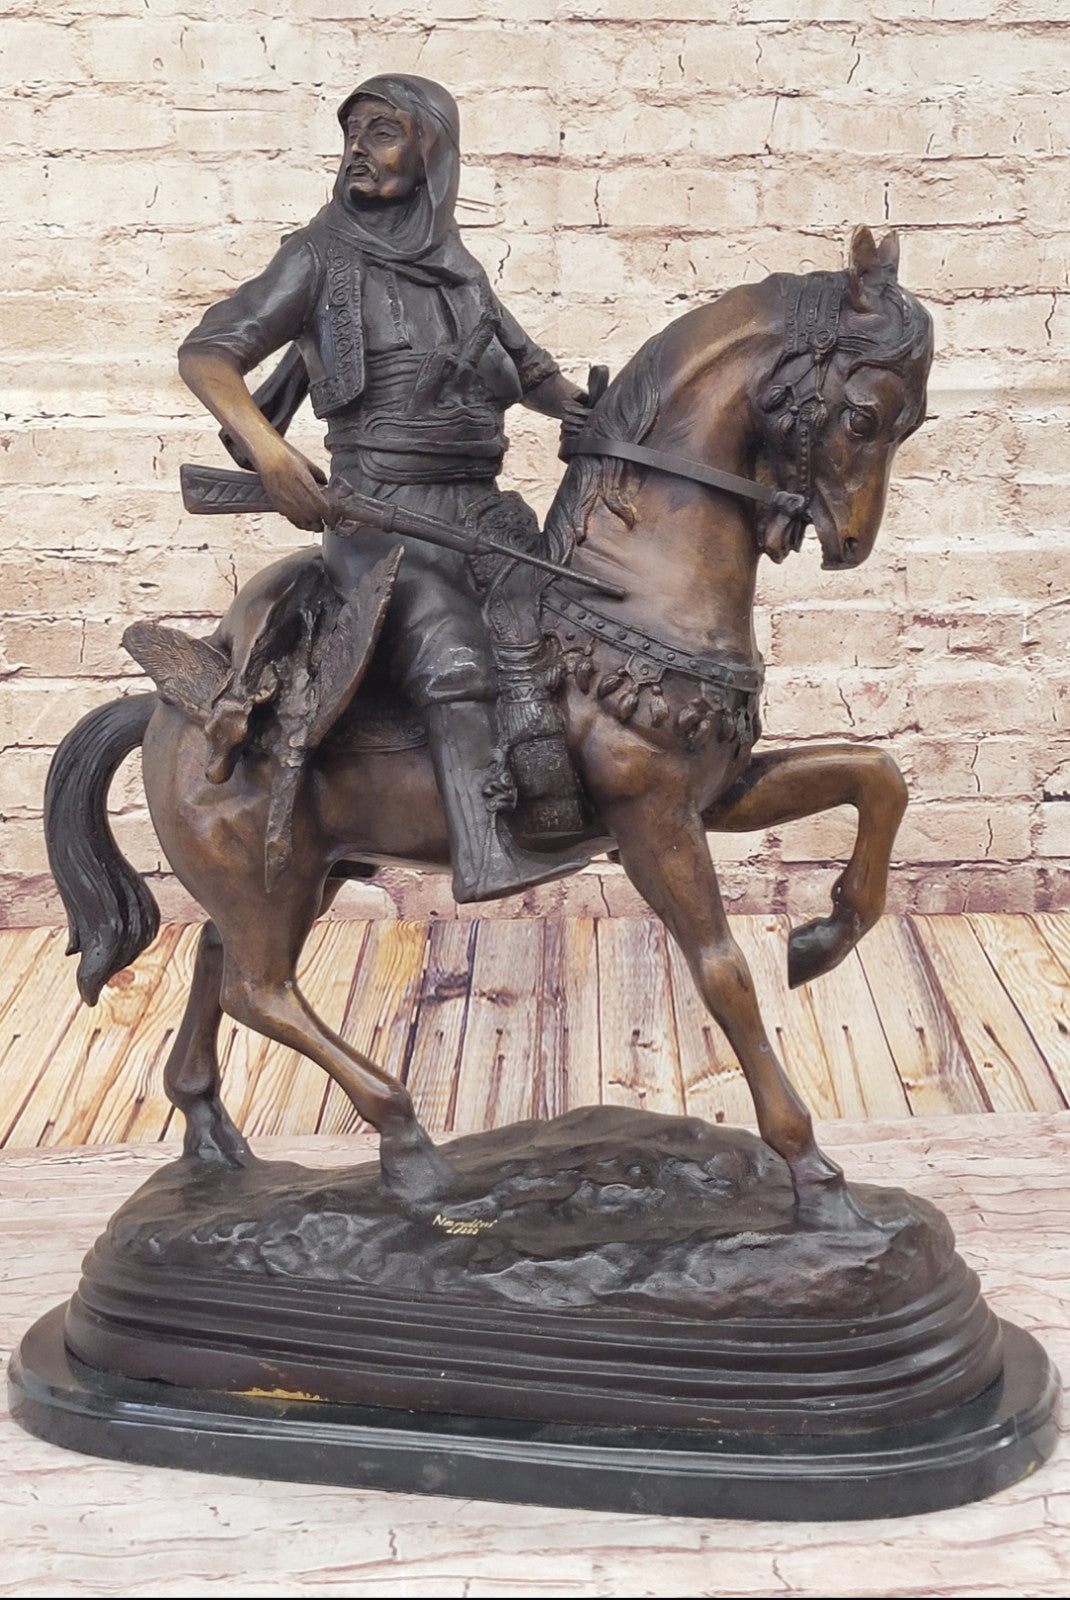 Limited Edition Arabian Horseman with Gun Bronze Sculpture by Nardini Hot Cast